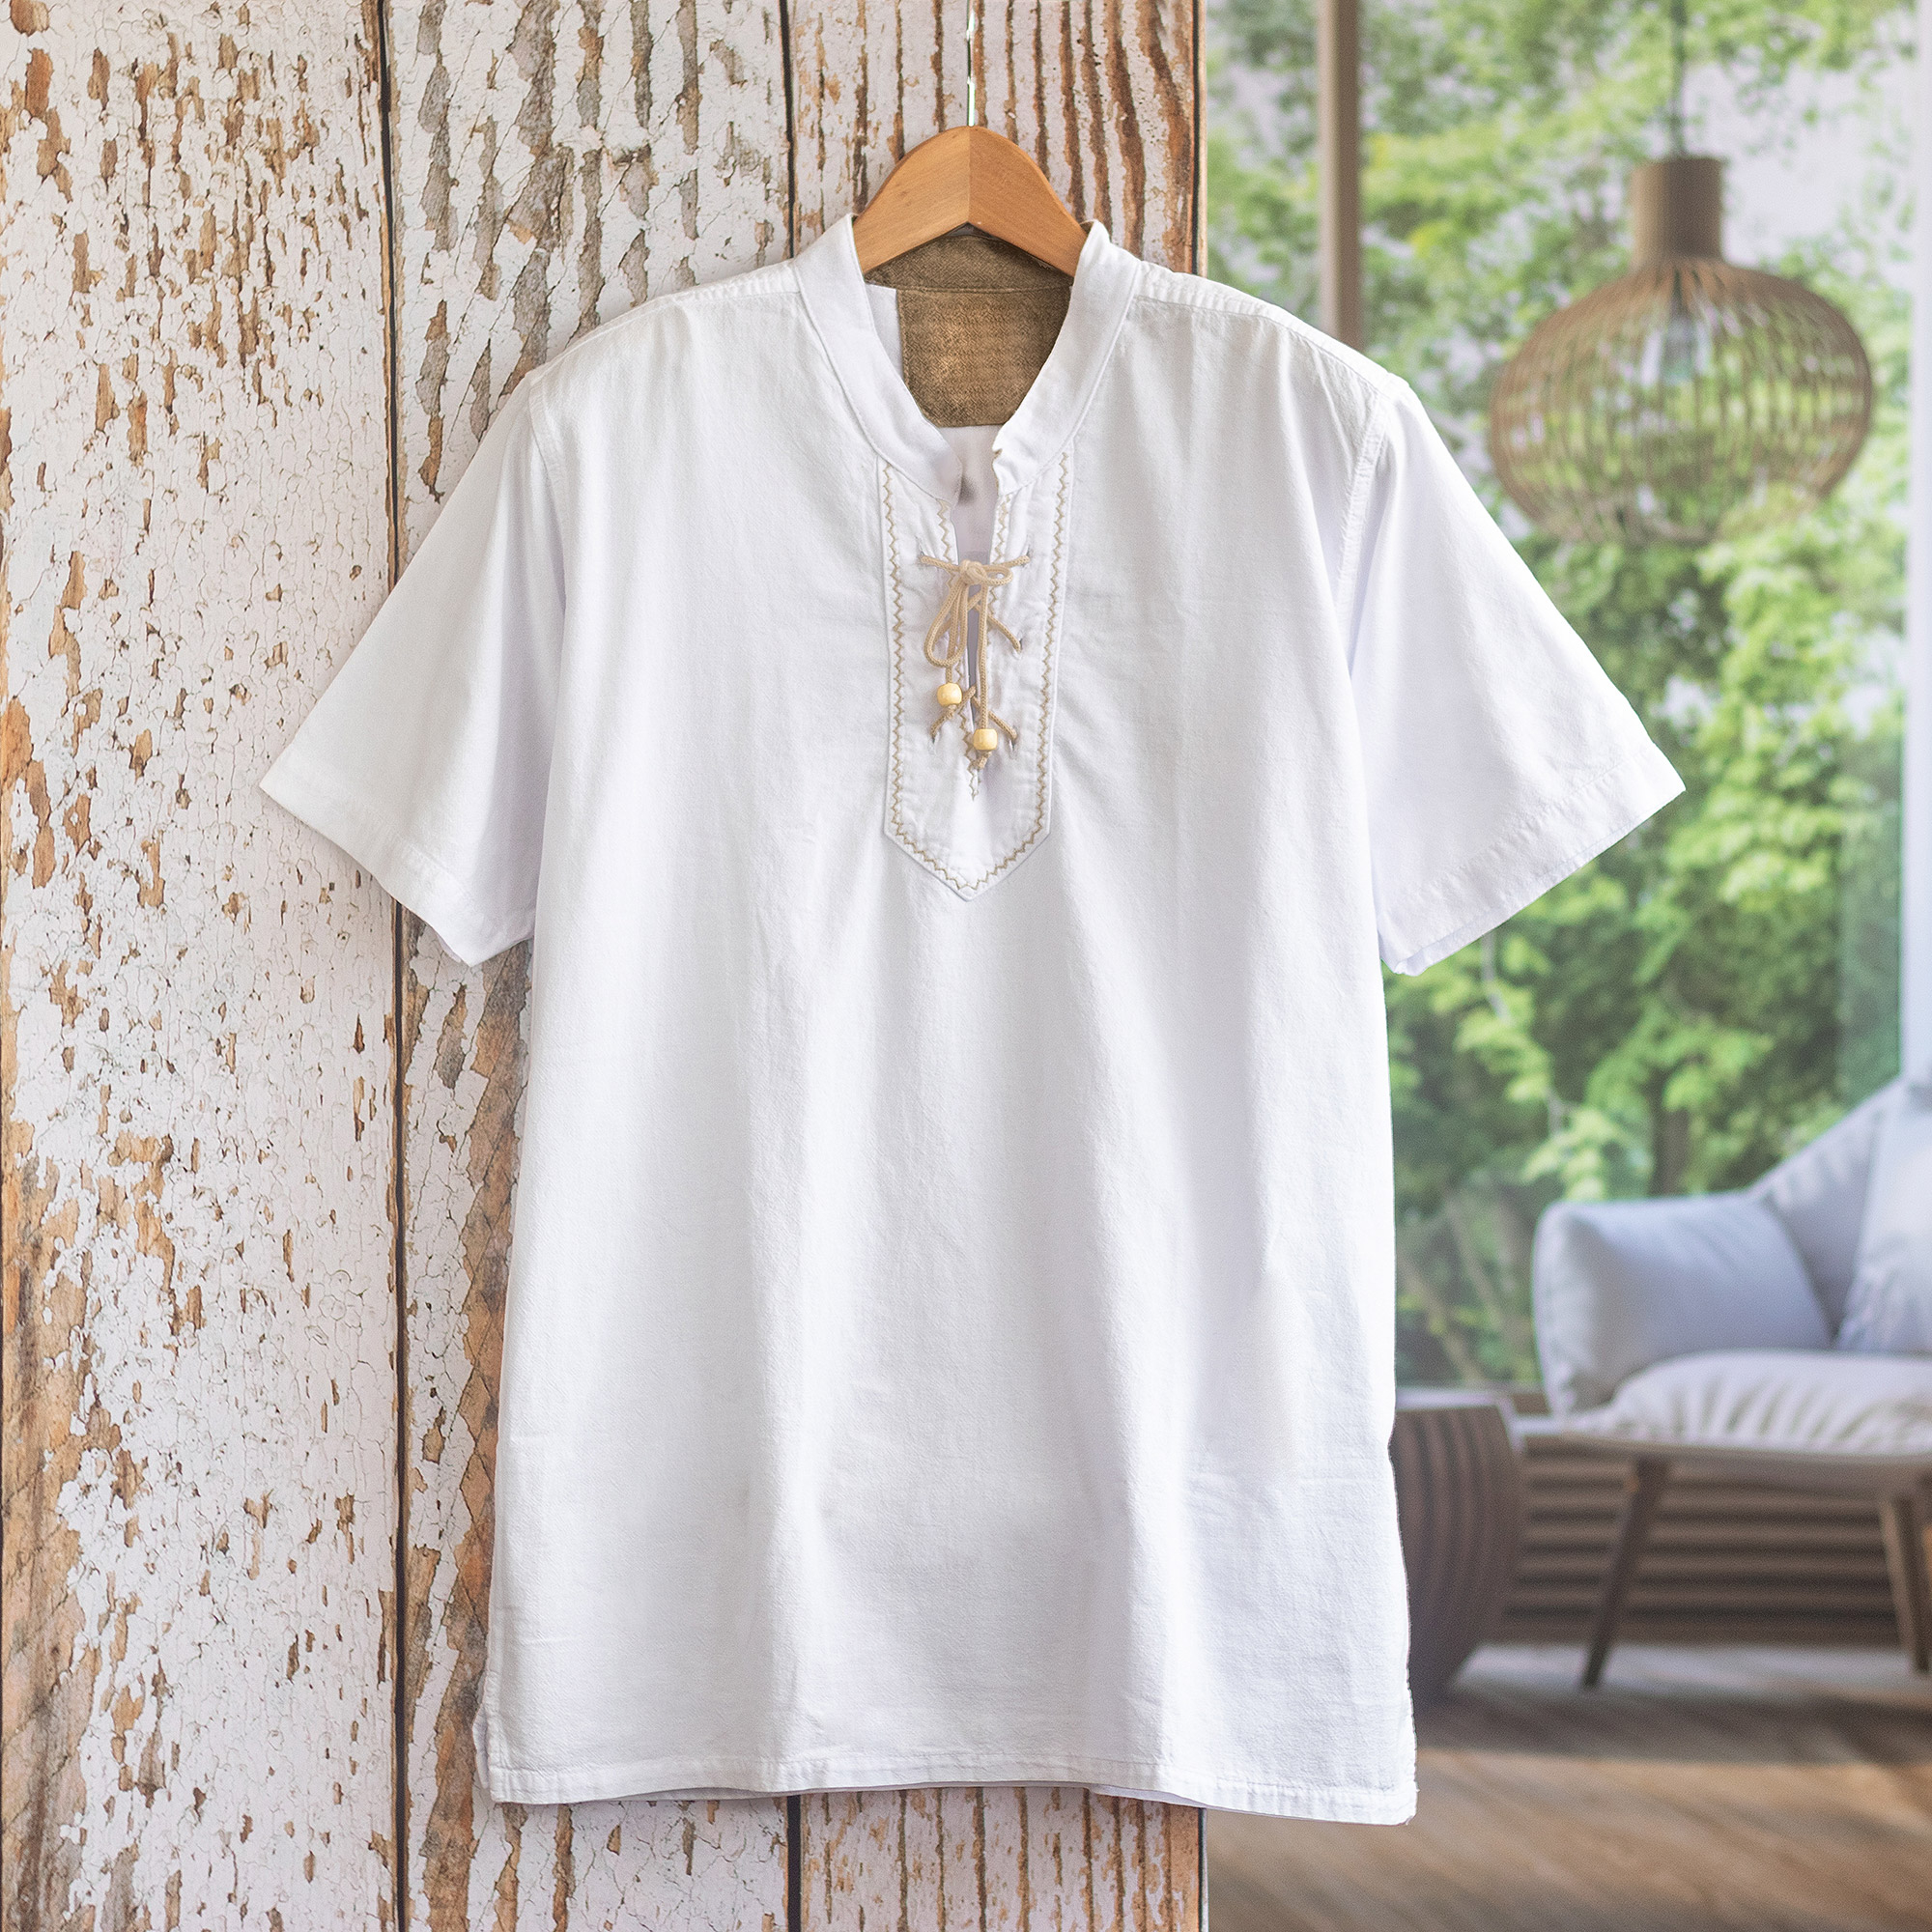 Men's Casual White Cotton Shirt Bohemian Style Made in Peru - Summer